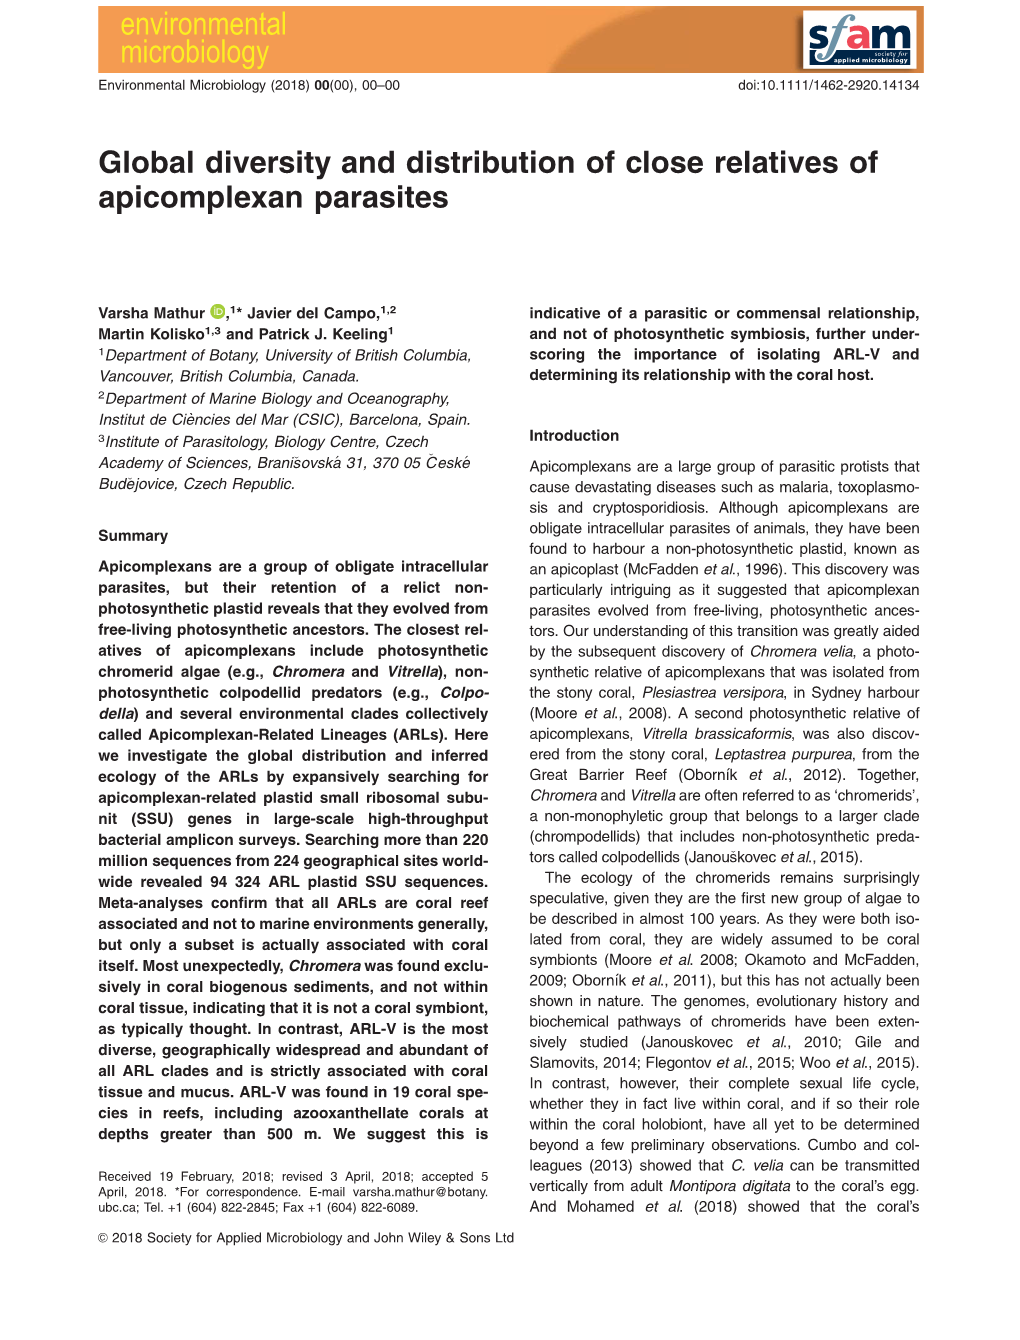 Global Diversity and Distribution of Close Relatives of Apicomplexan Parasites